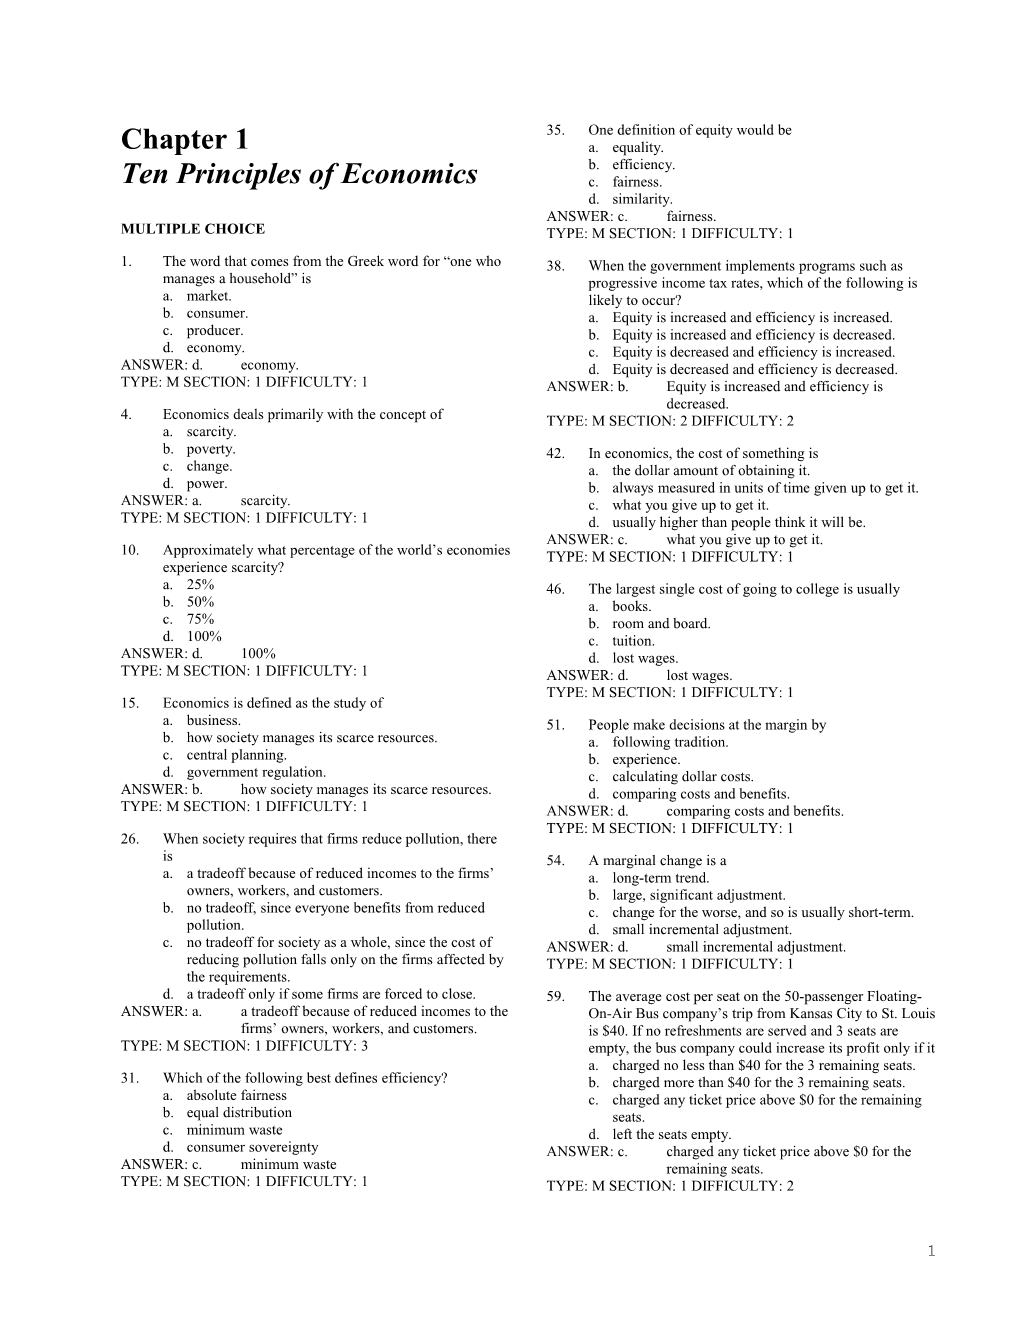 Chapter 1/Ten Principles of Economics 1